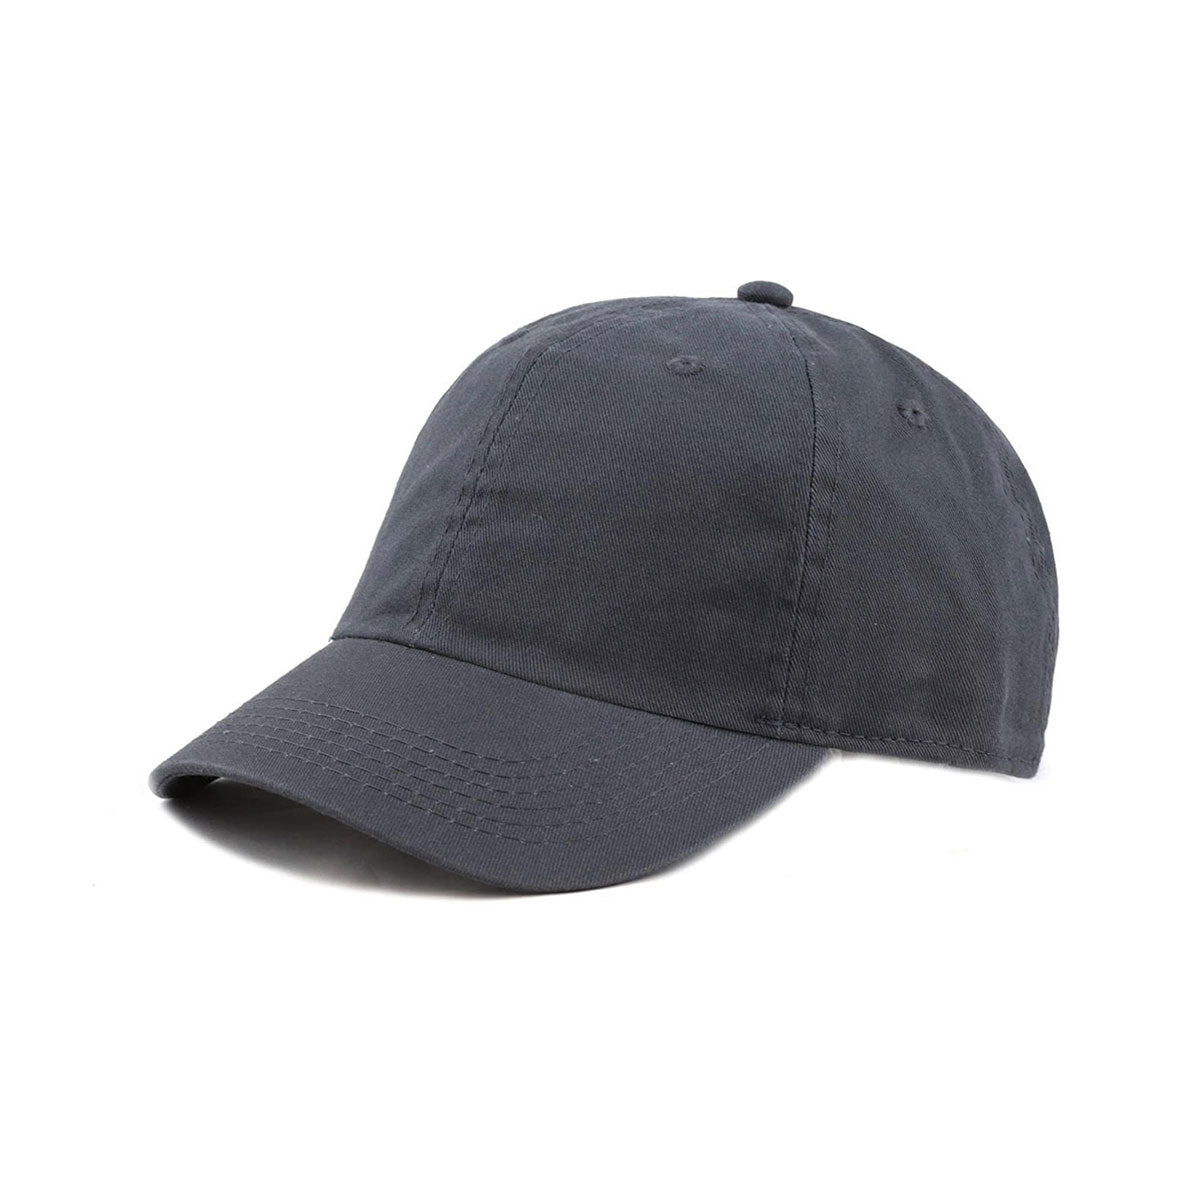 Baseball Hat - Charcoal Gray